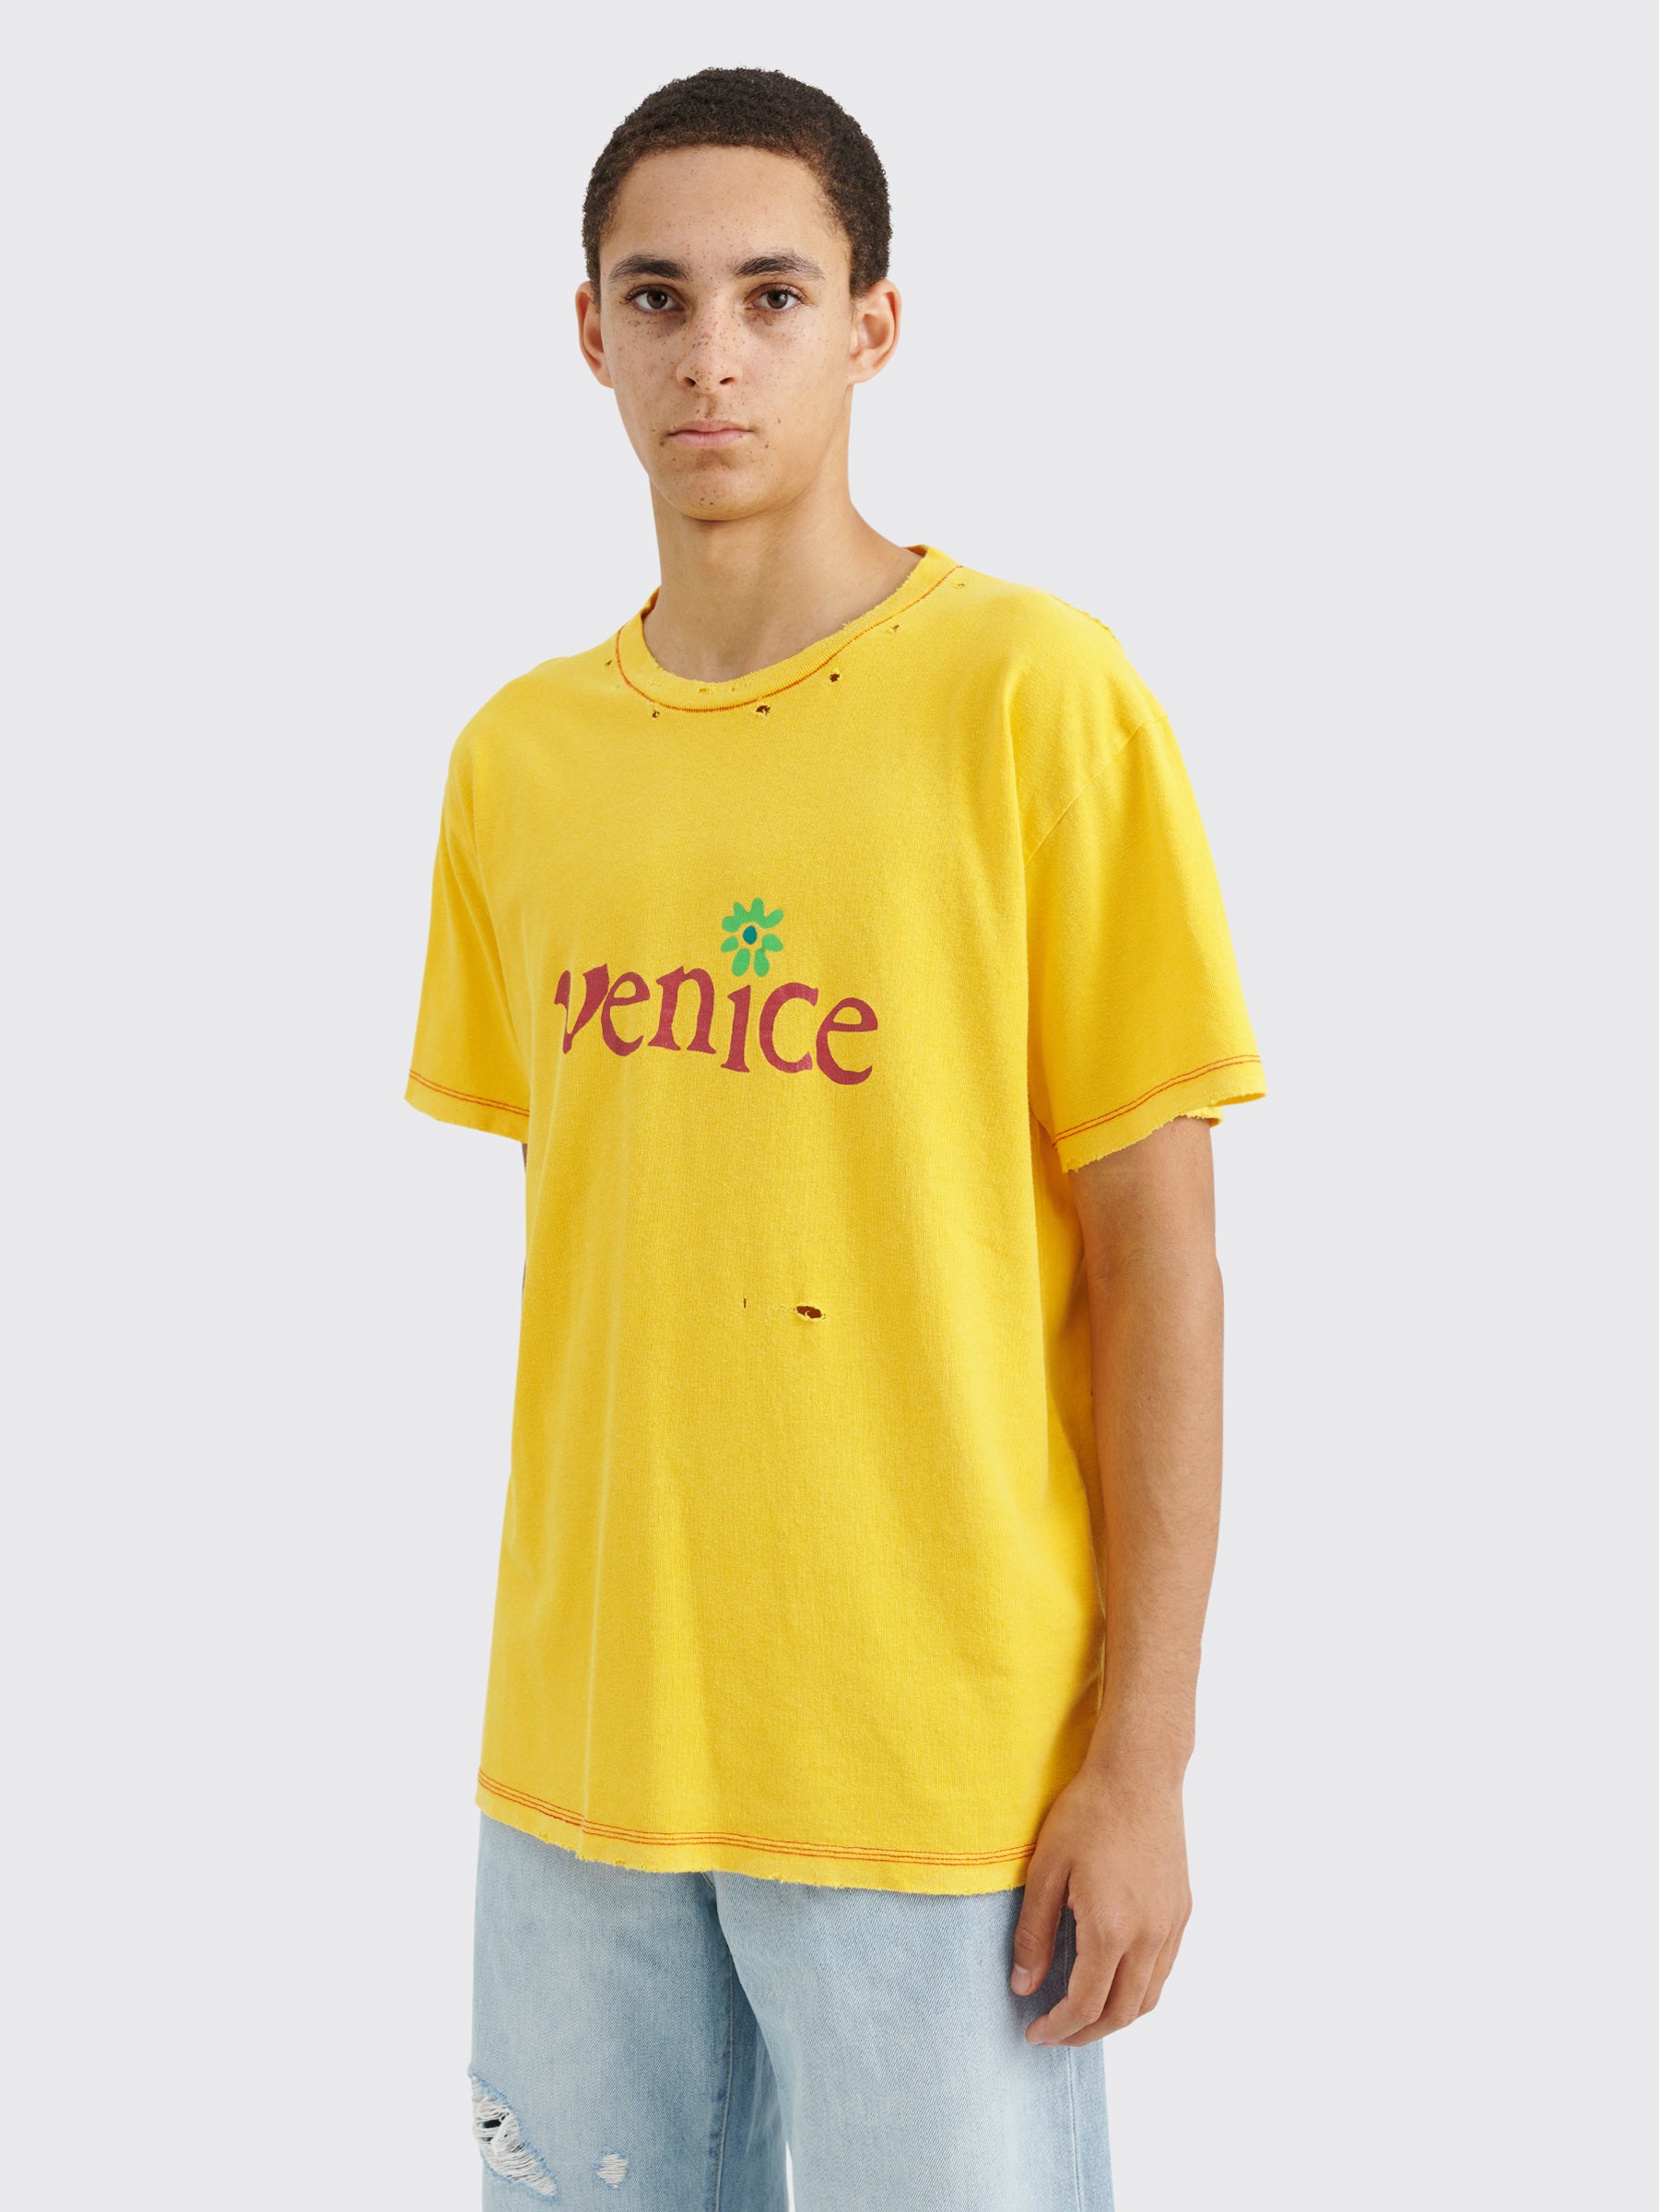 ERL Venice T-shirt Yellow